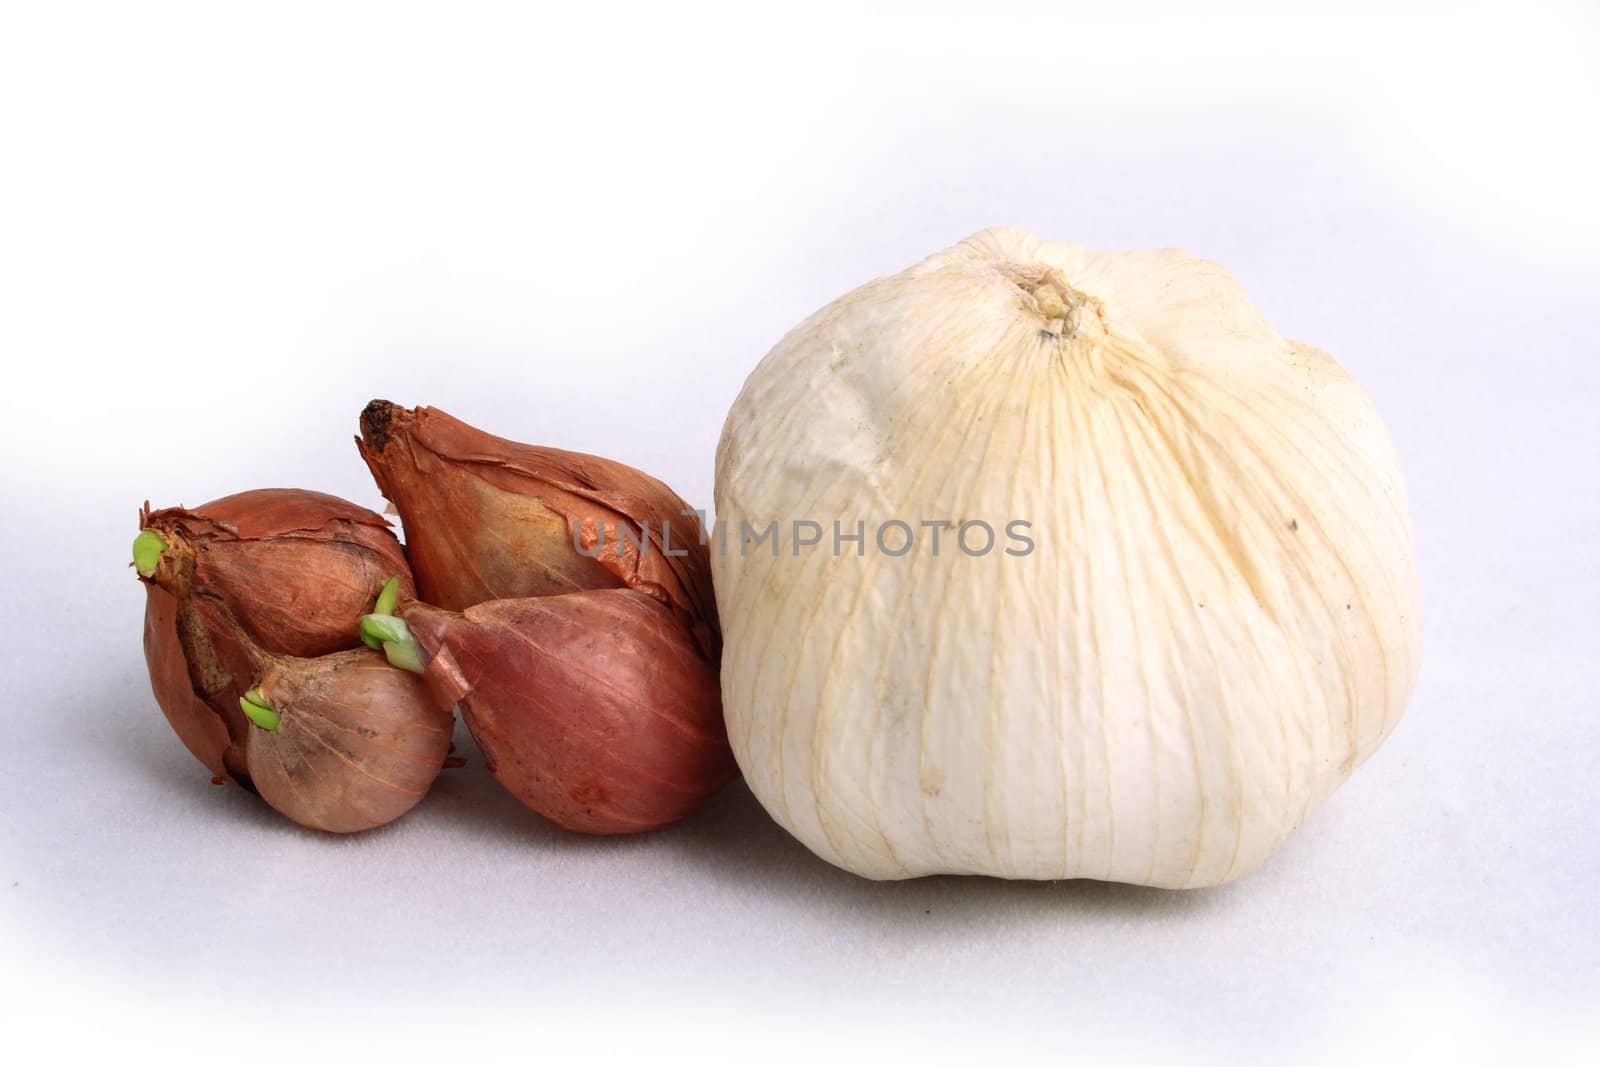 Small onions & garlic by BengLim